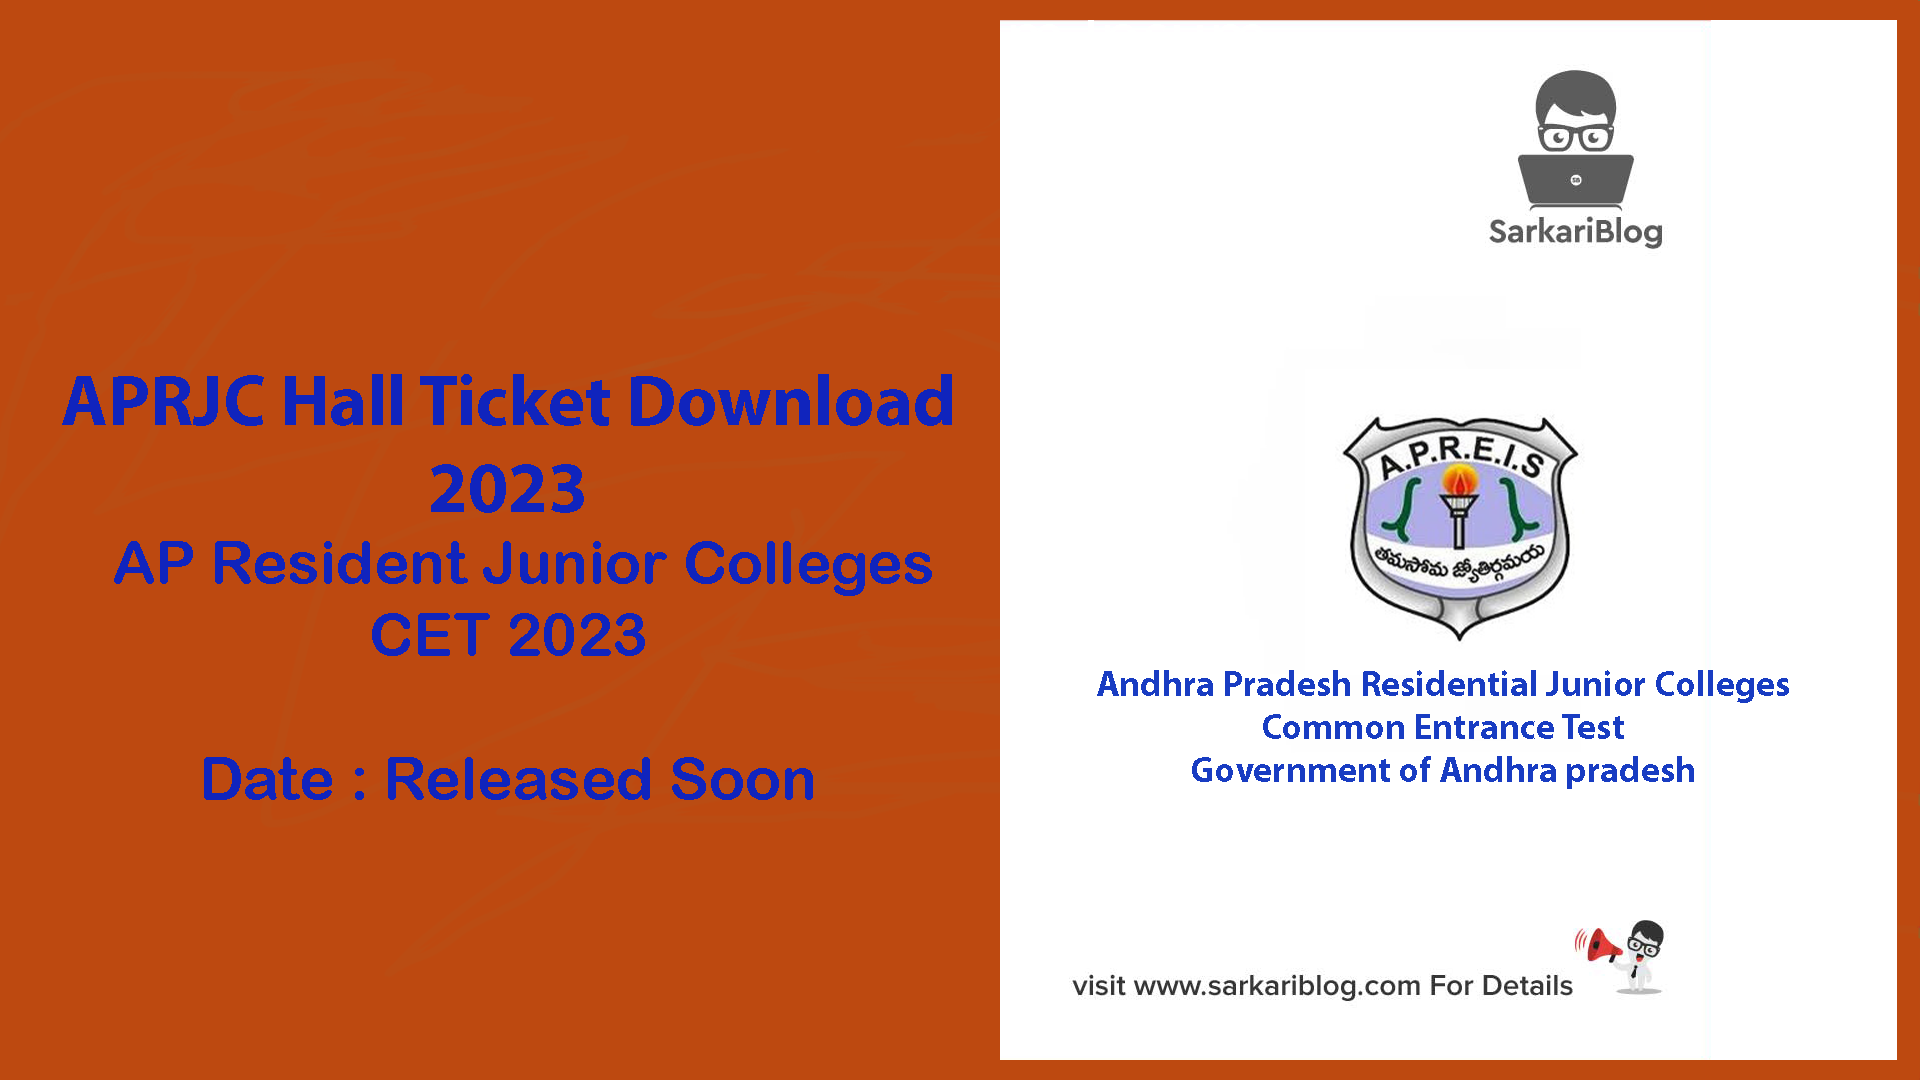 APRJC Hall Ticket Download 2023